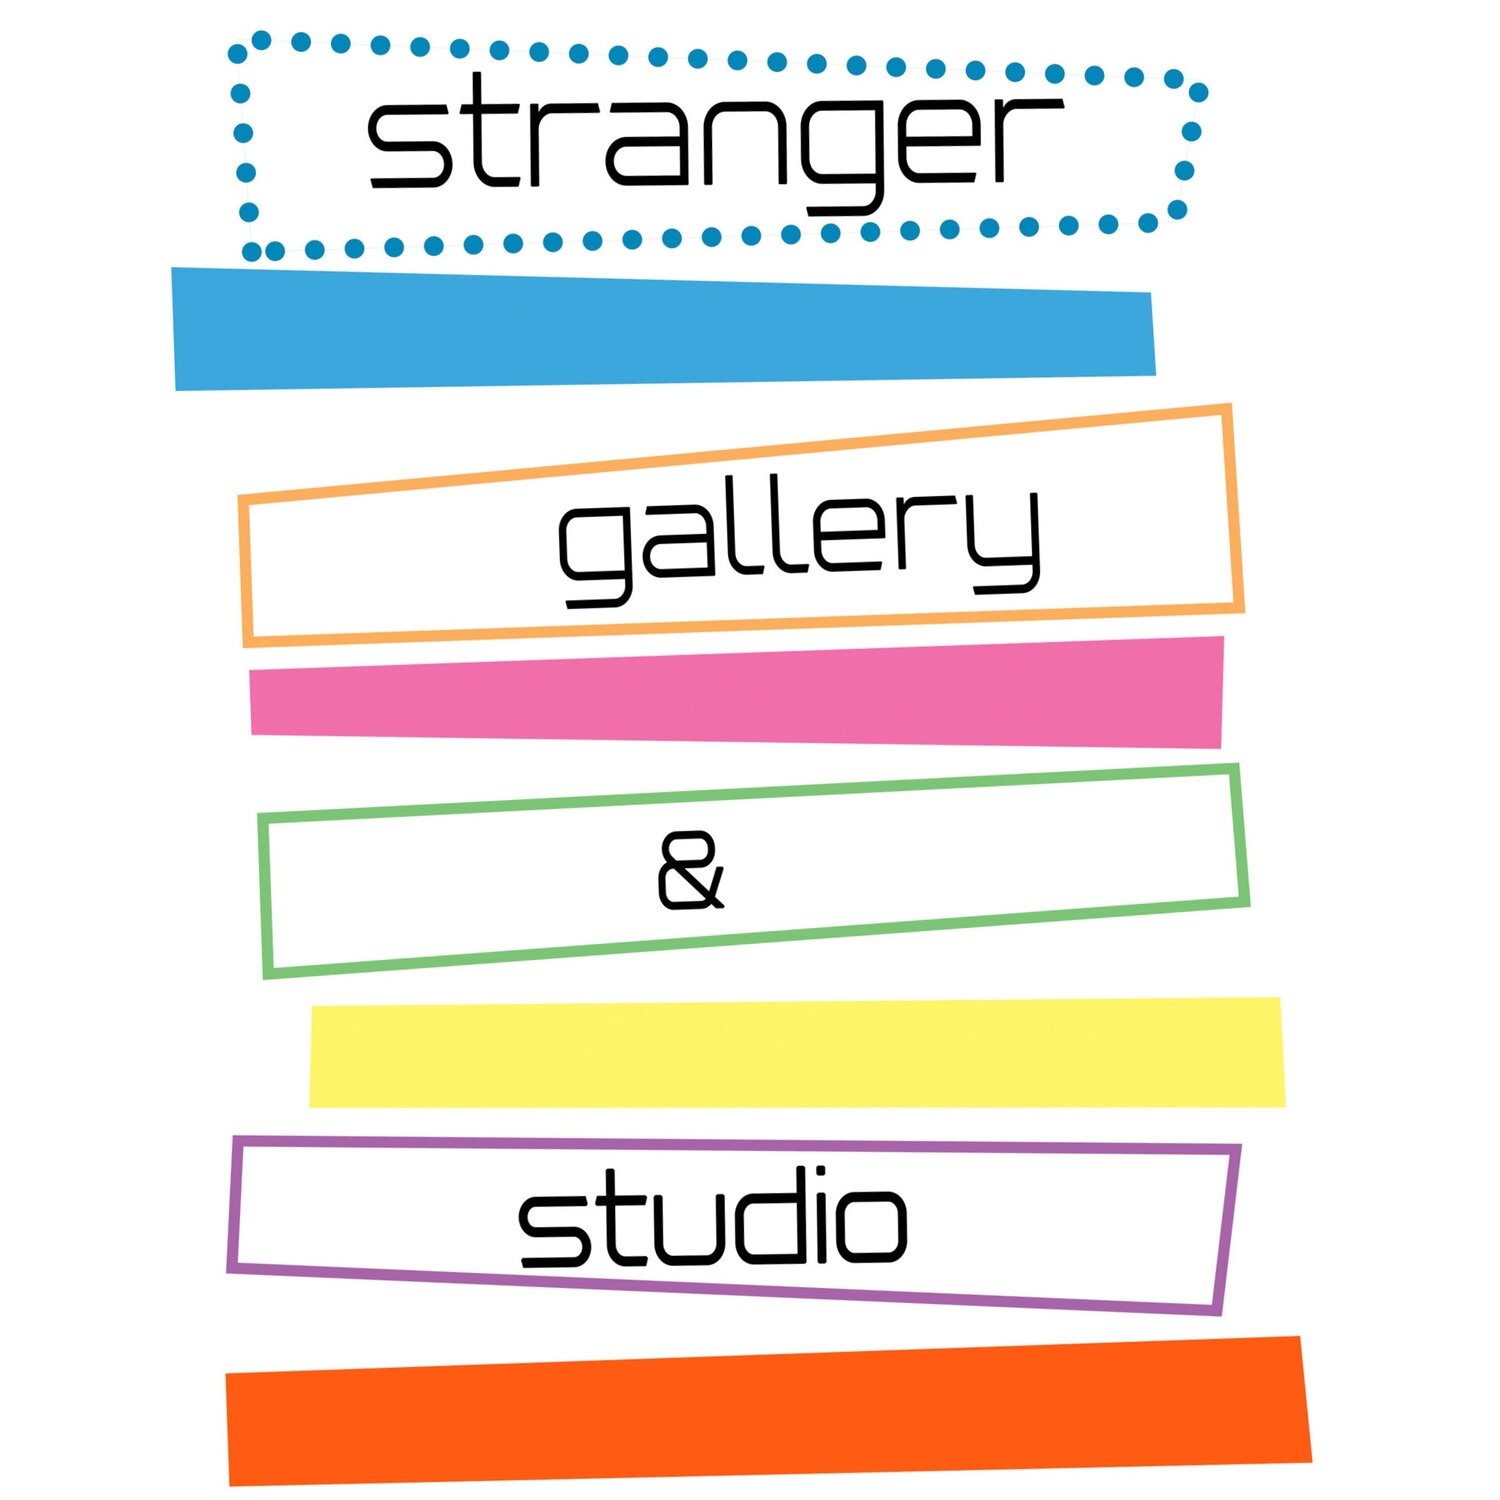 Stranger Gallery and Studio